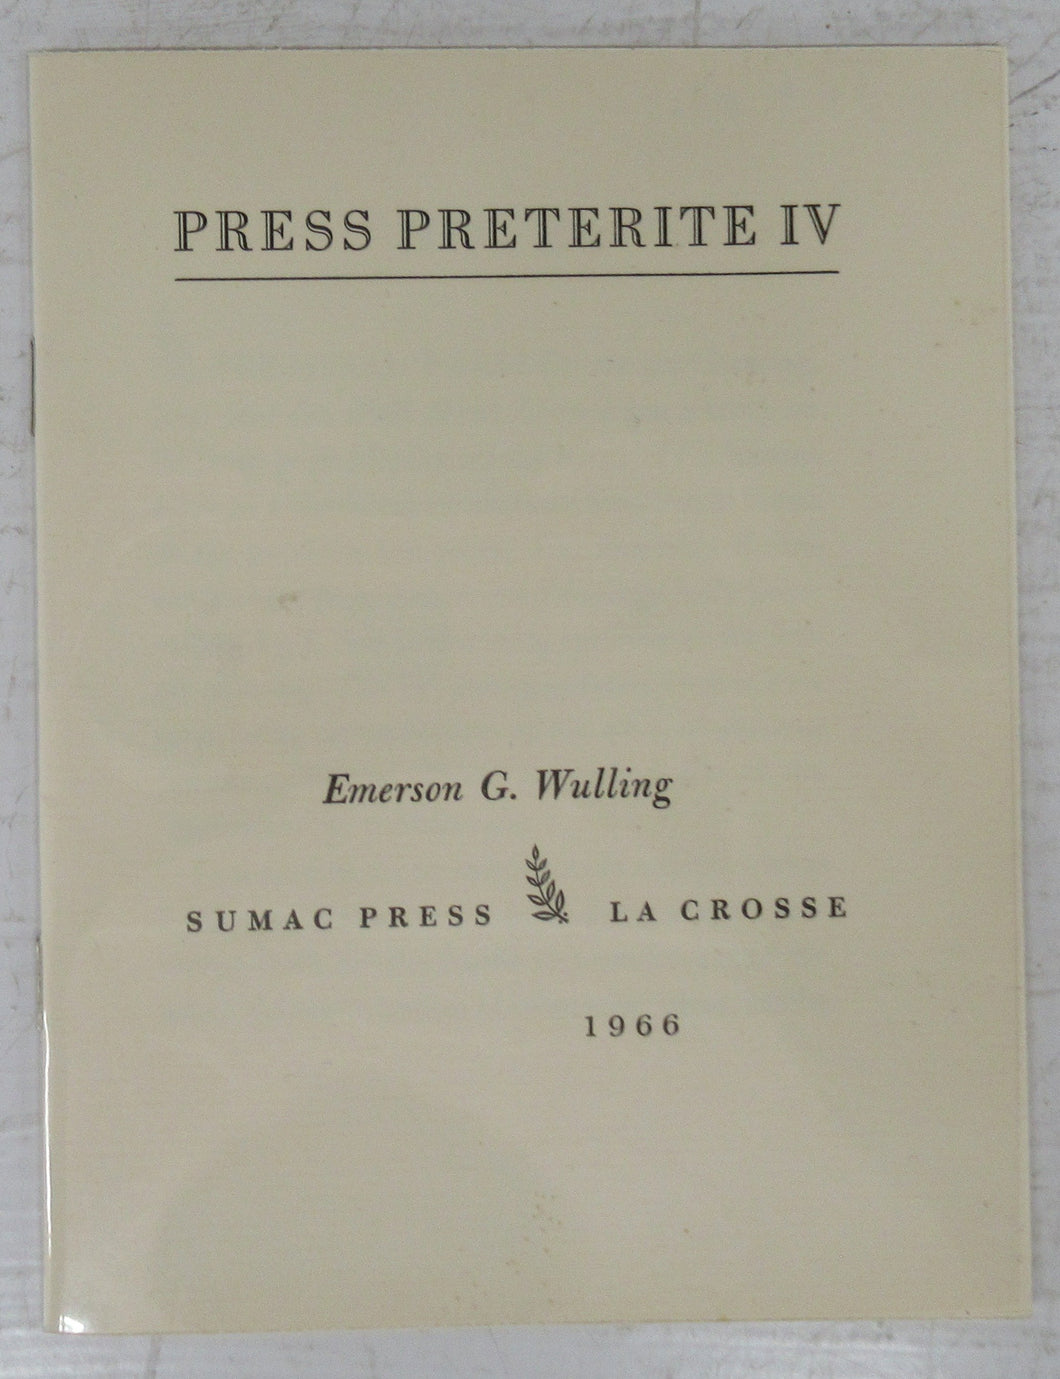 Press Preterite IV